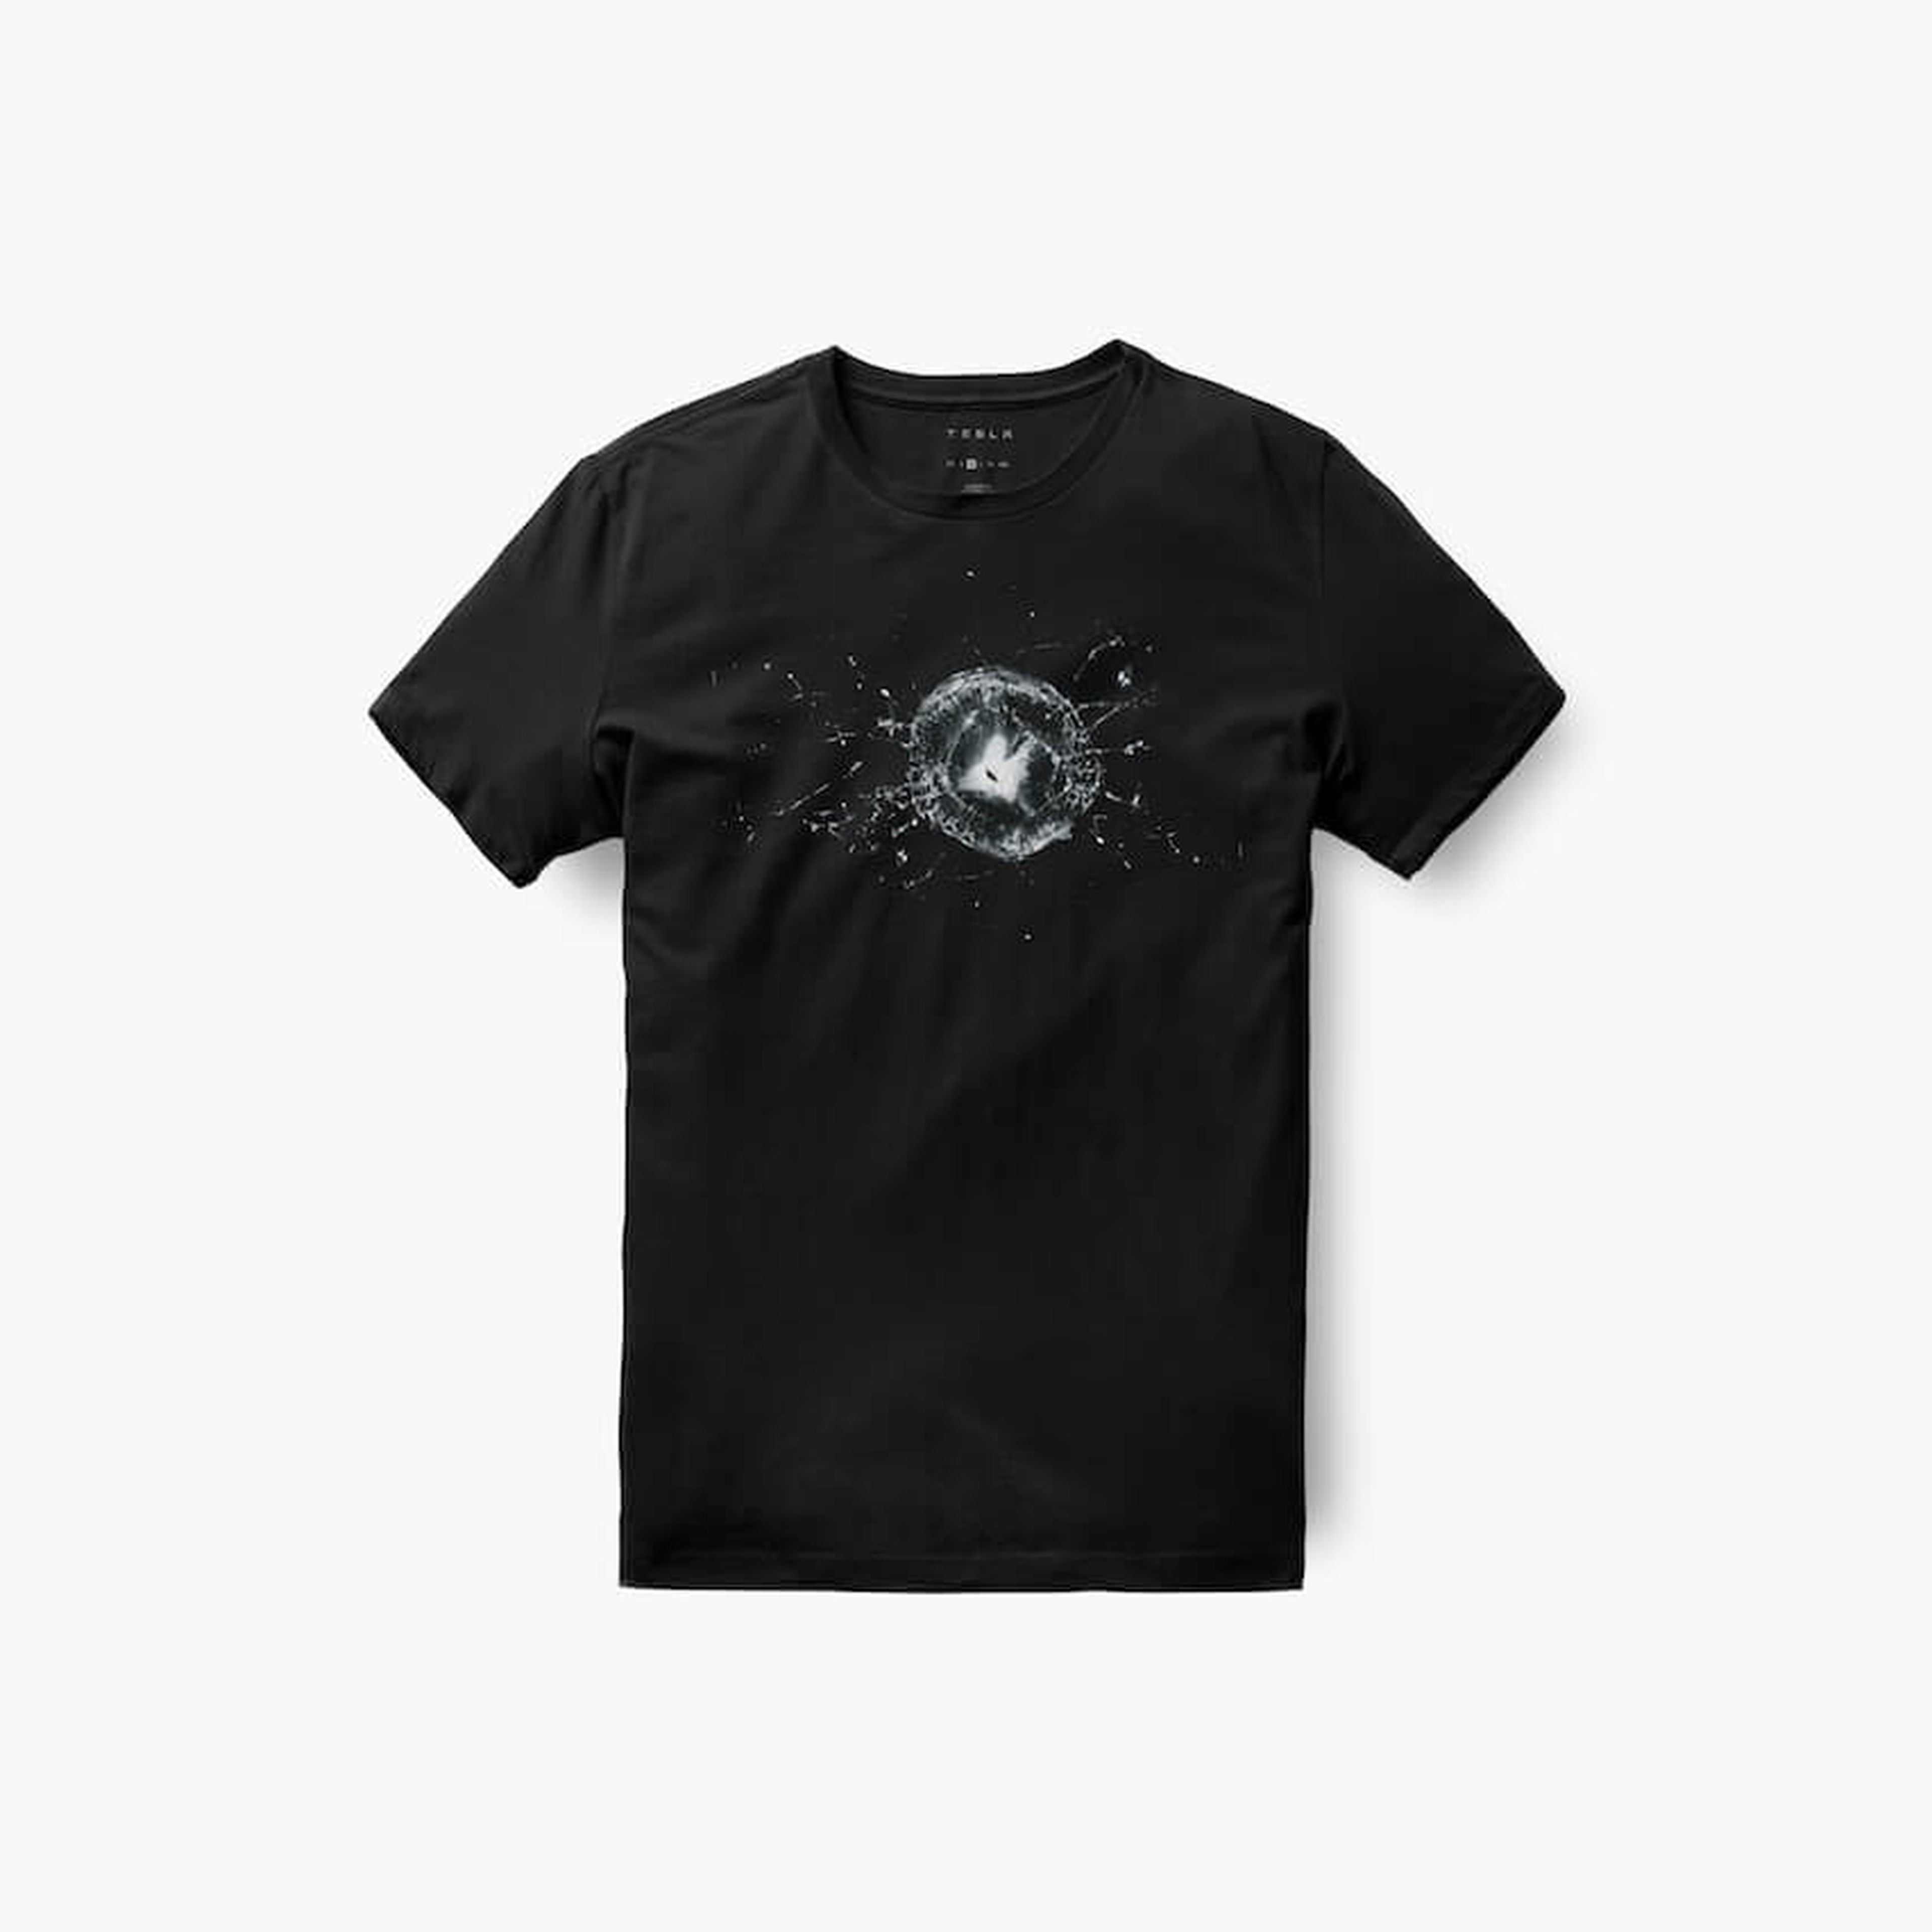 La camiseta de Tesla inspirada en el cristal roto del Cybertruck